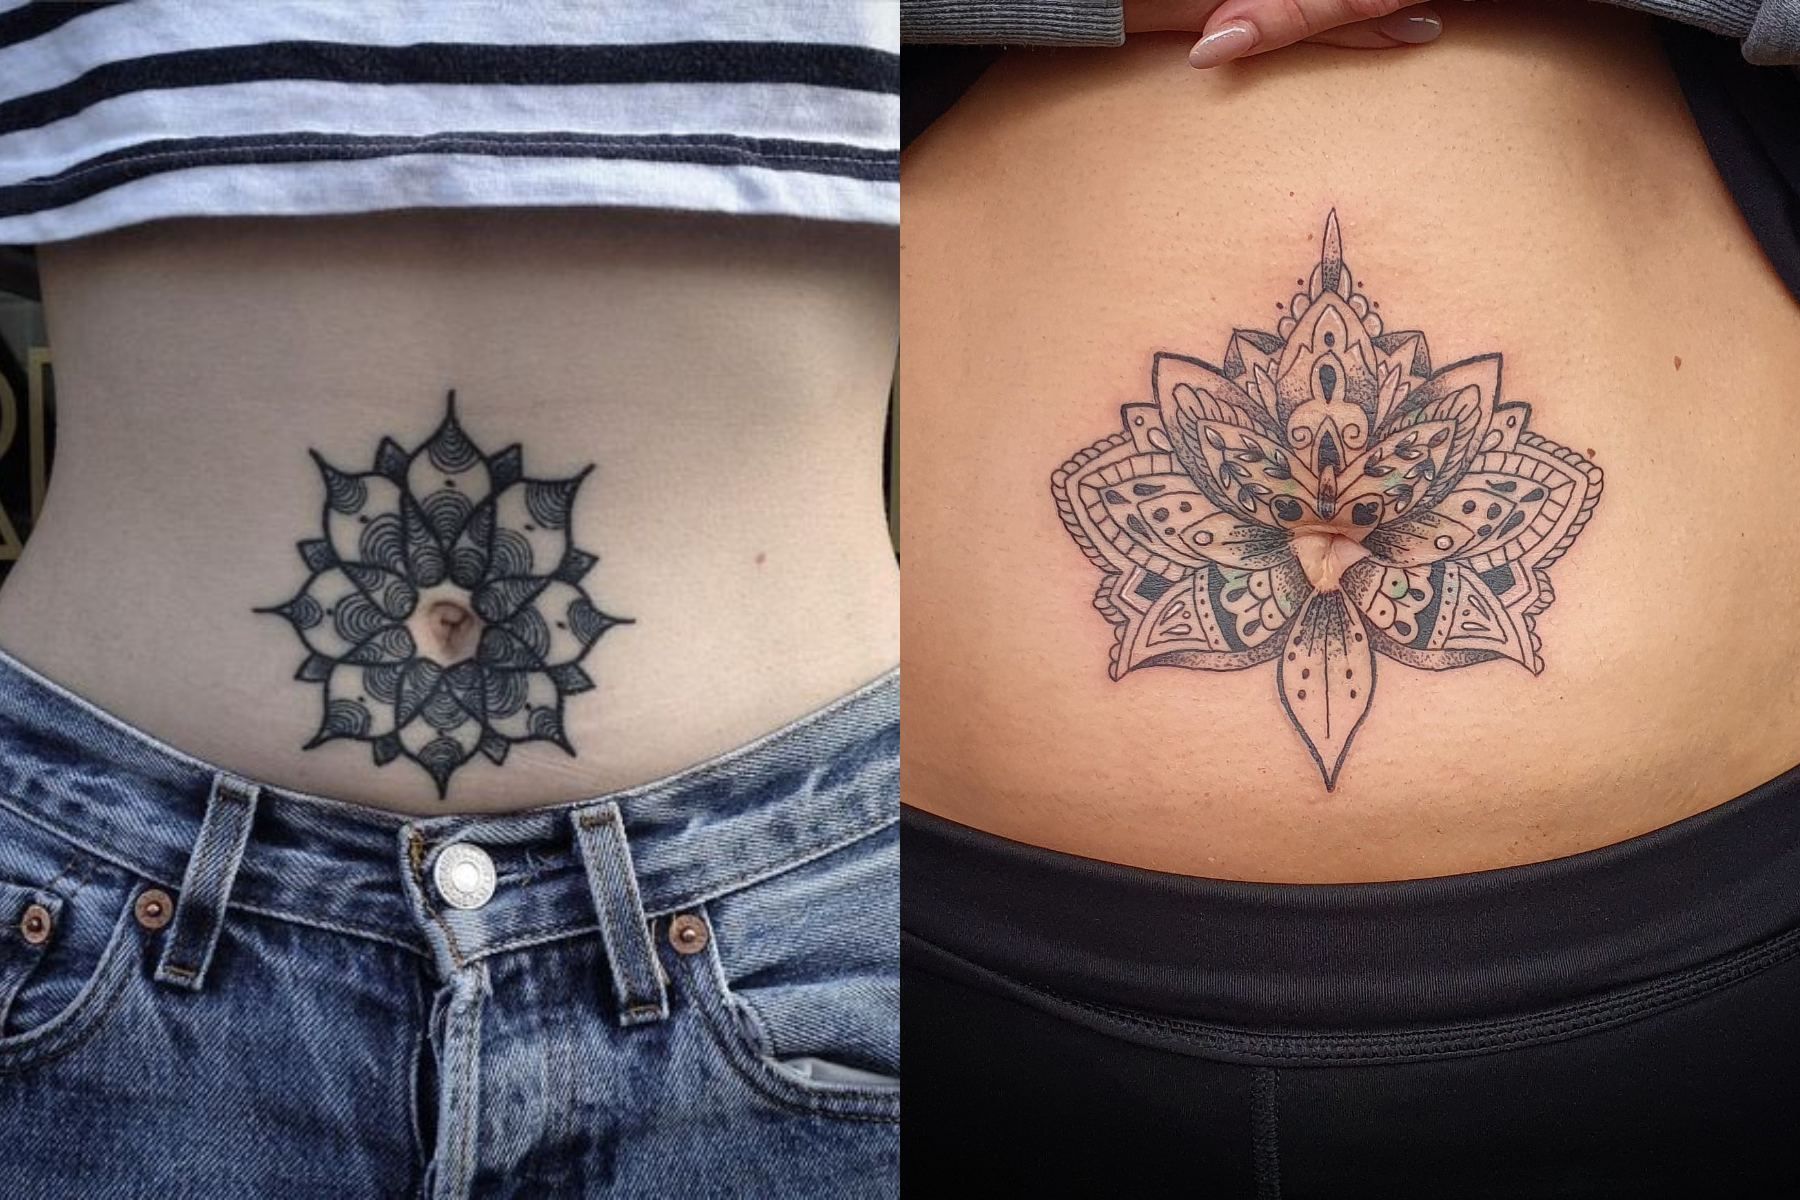 Two ladies with black mandala tattoos